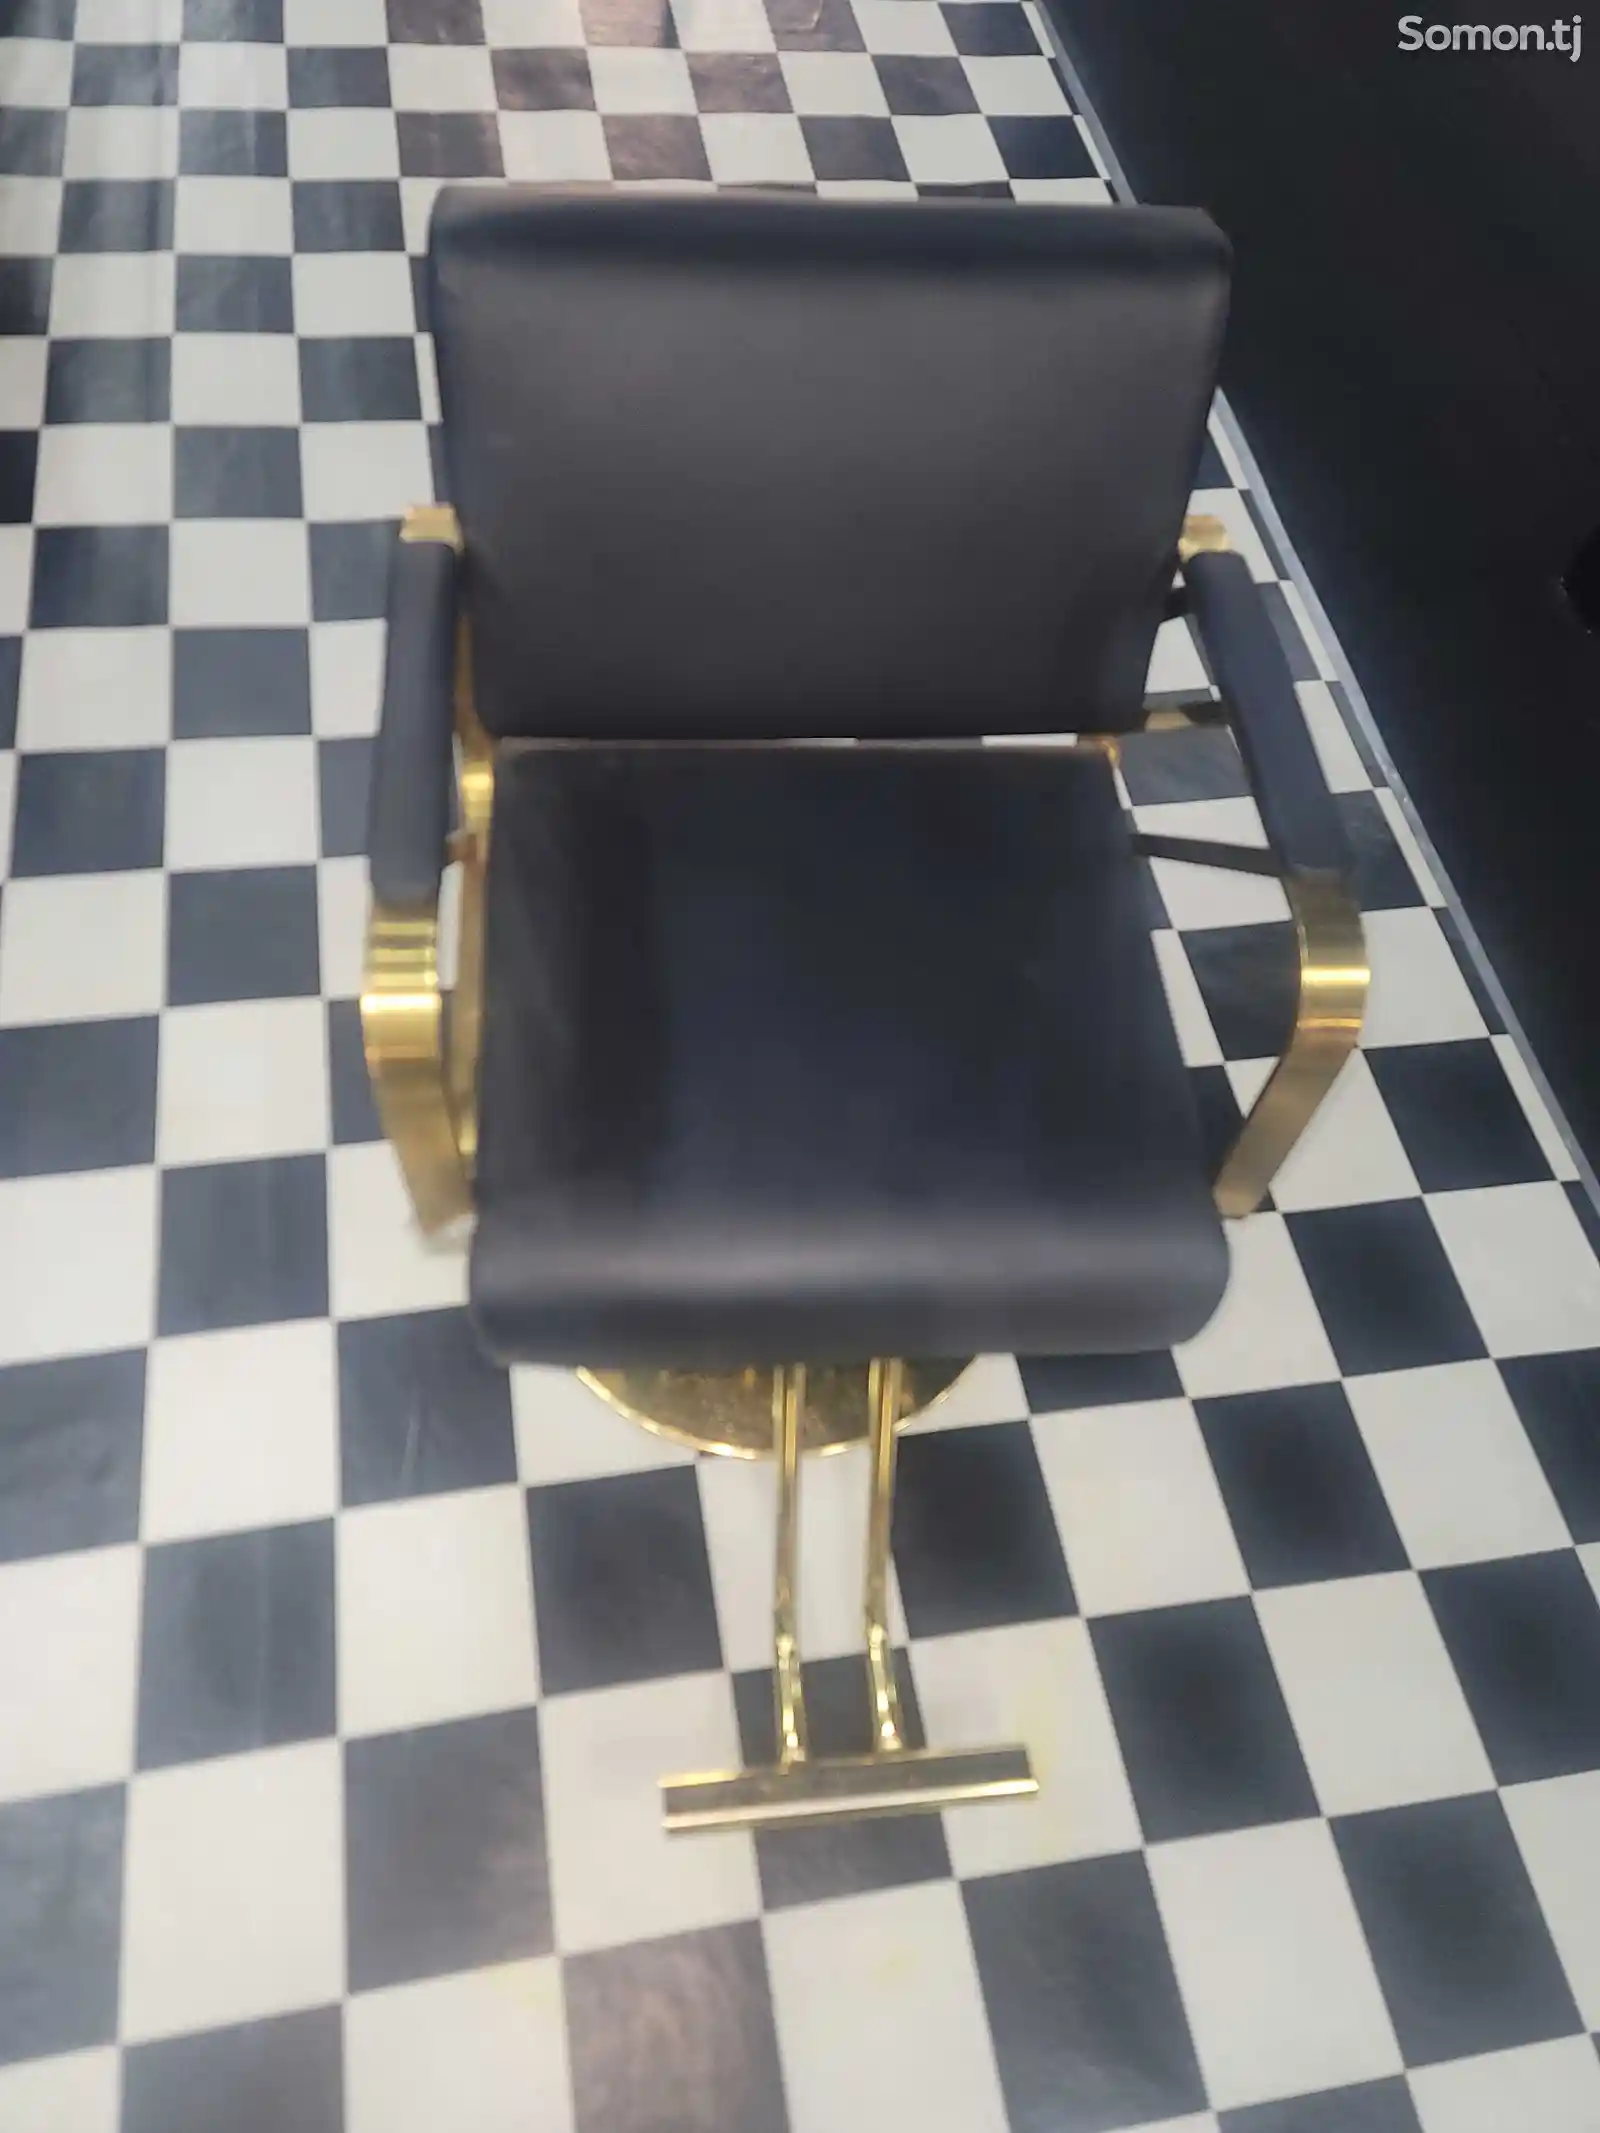 Кресло для салона красоты-2